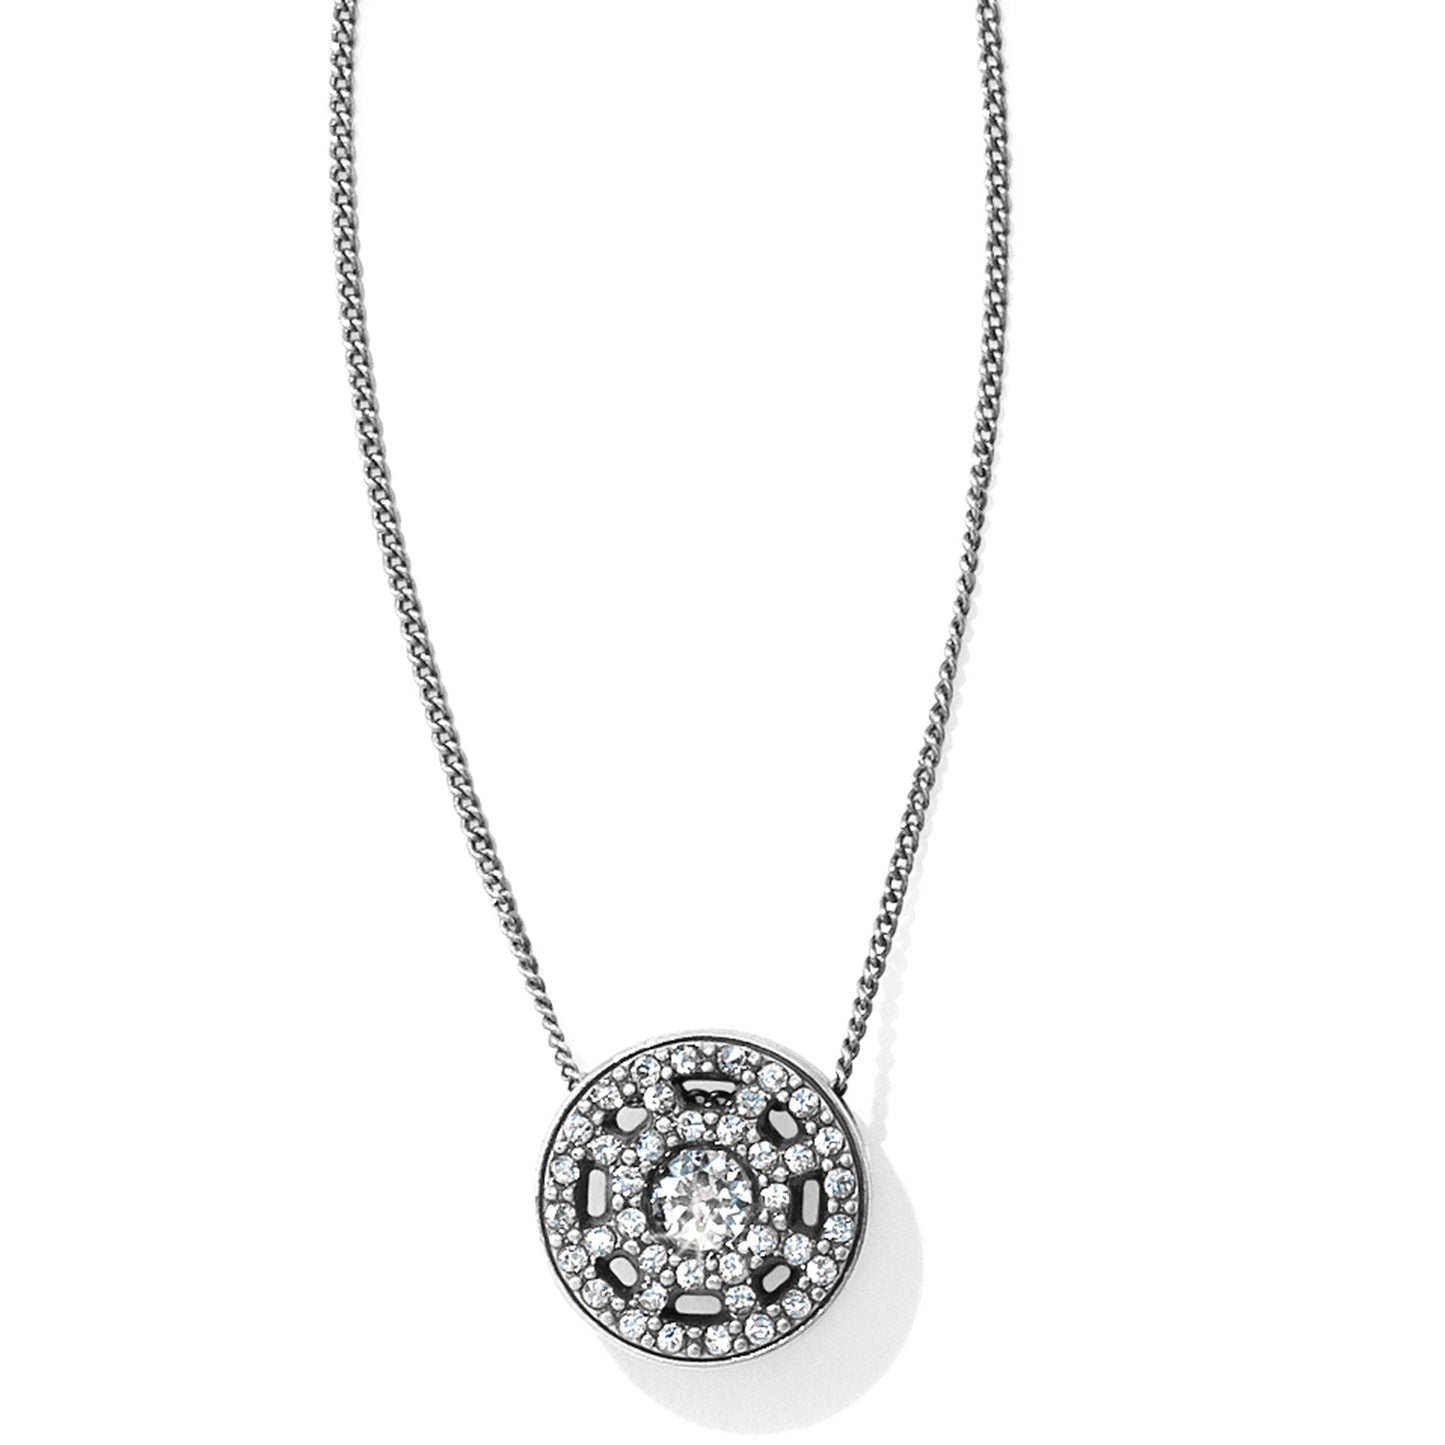 Illumina Petite Necklace - Jewelry - SierraLily